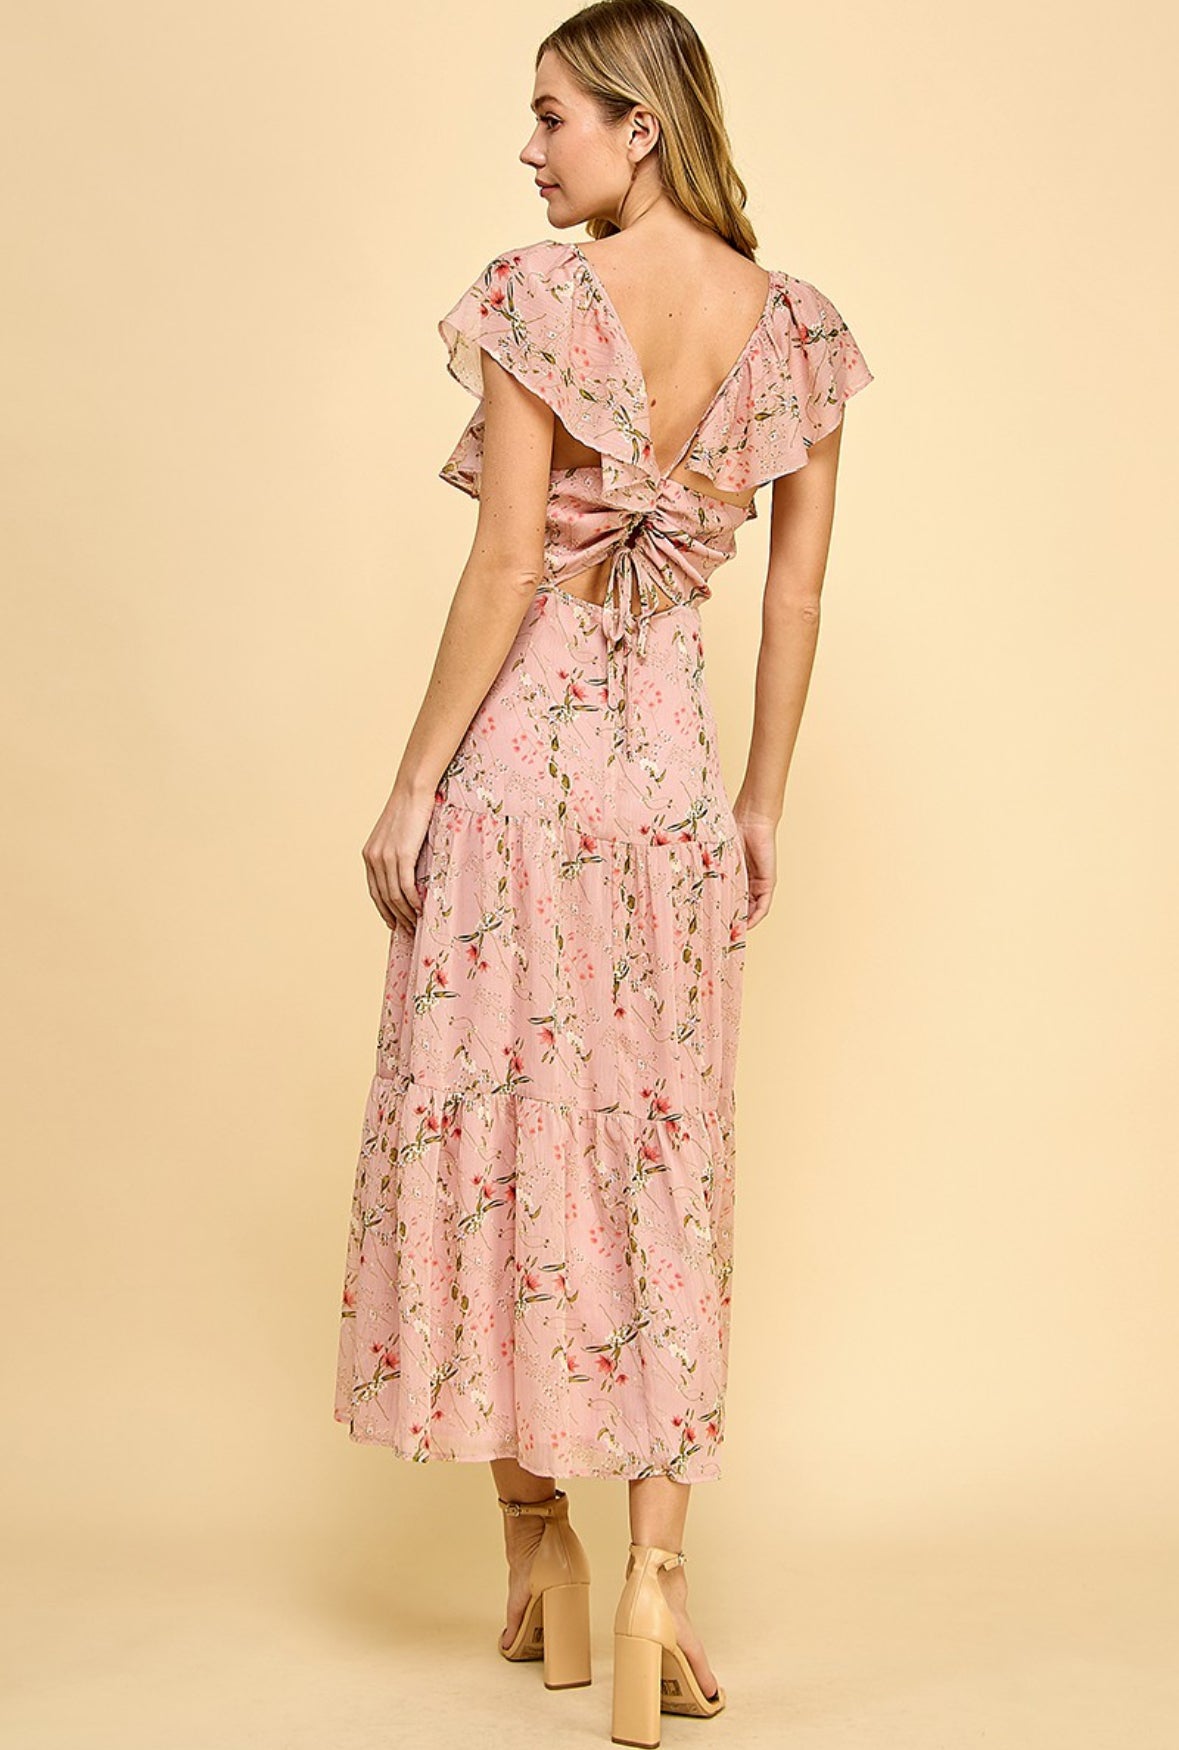 Rosy Romance Dress